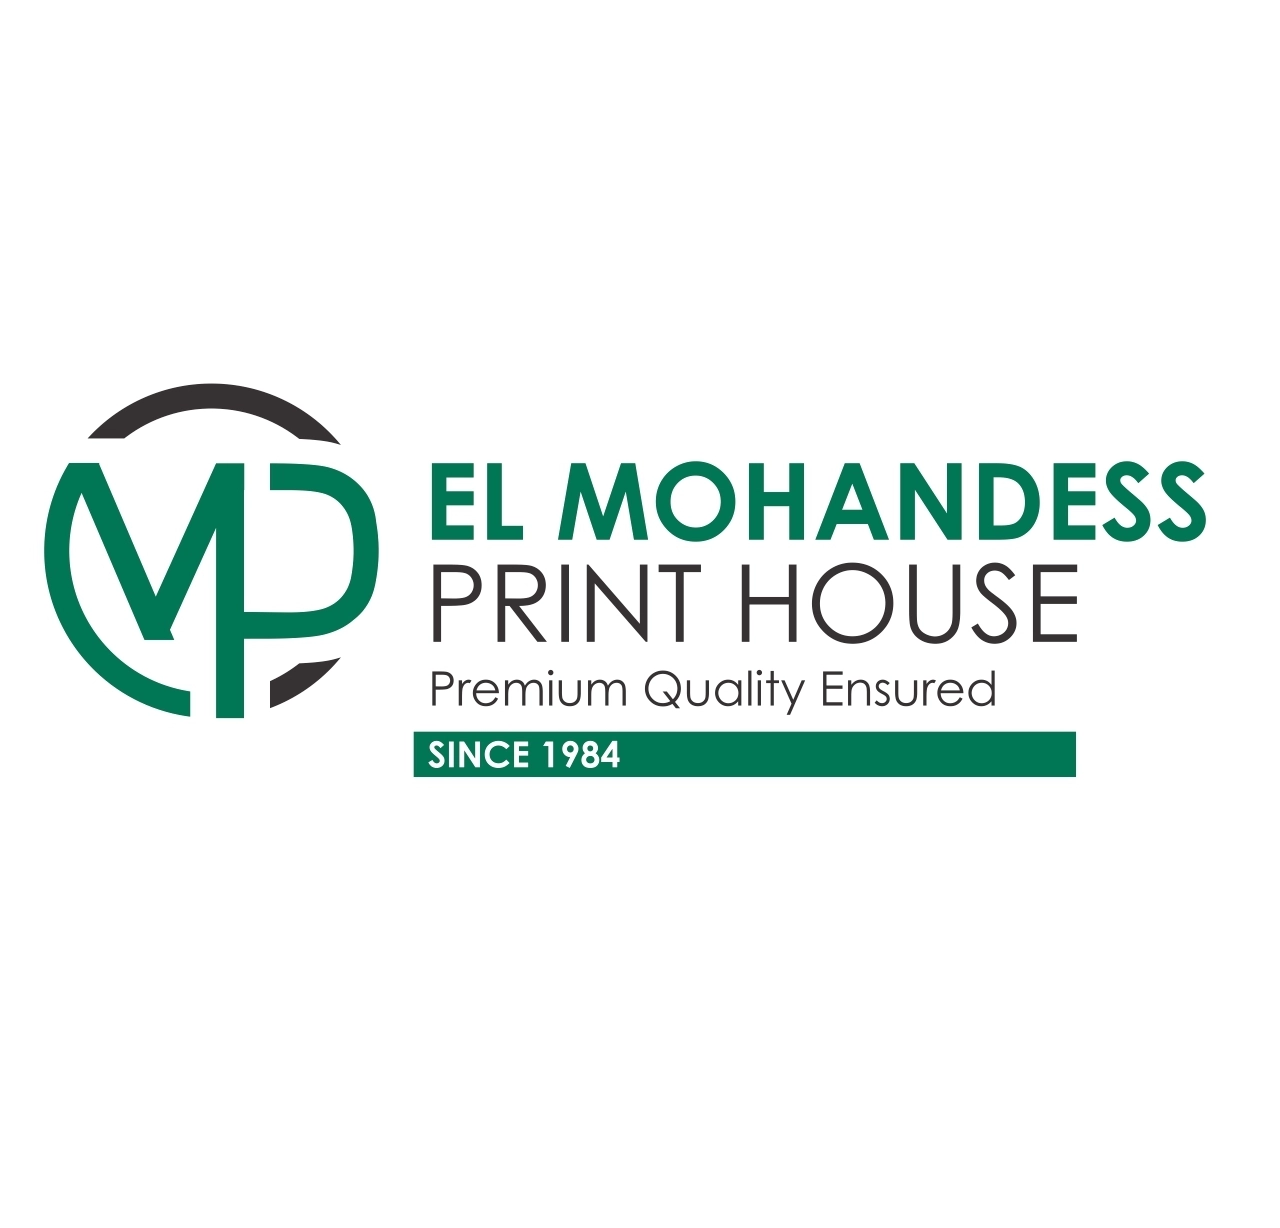 El Mohandess Print House